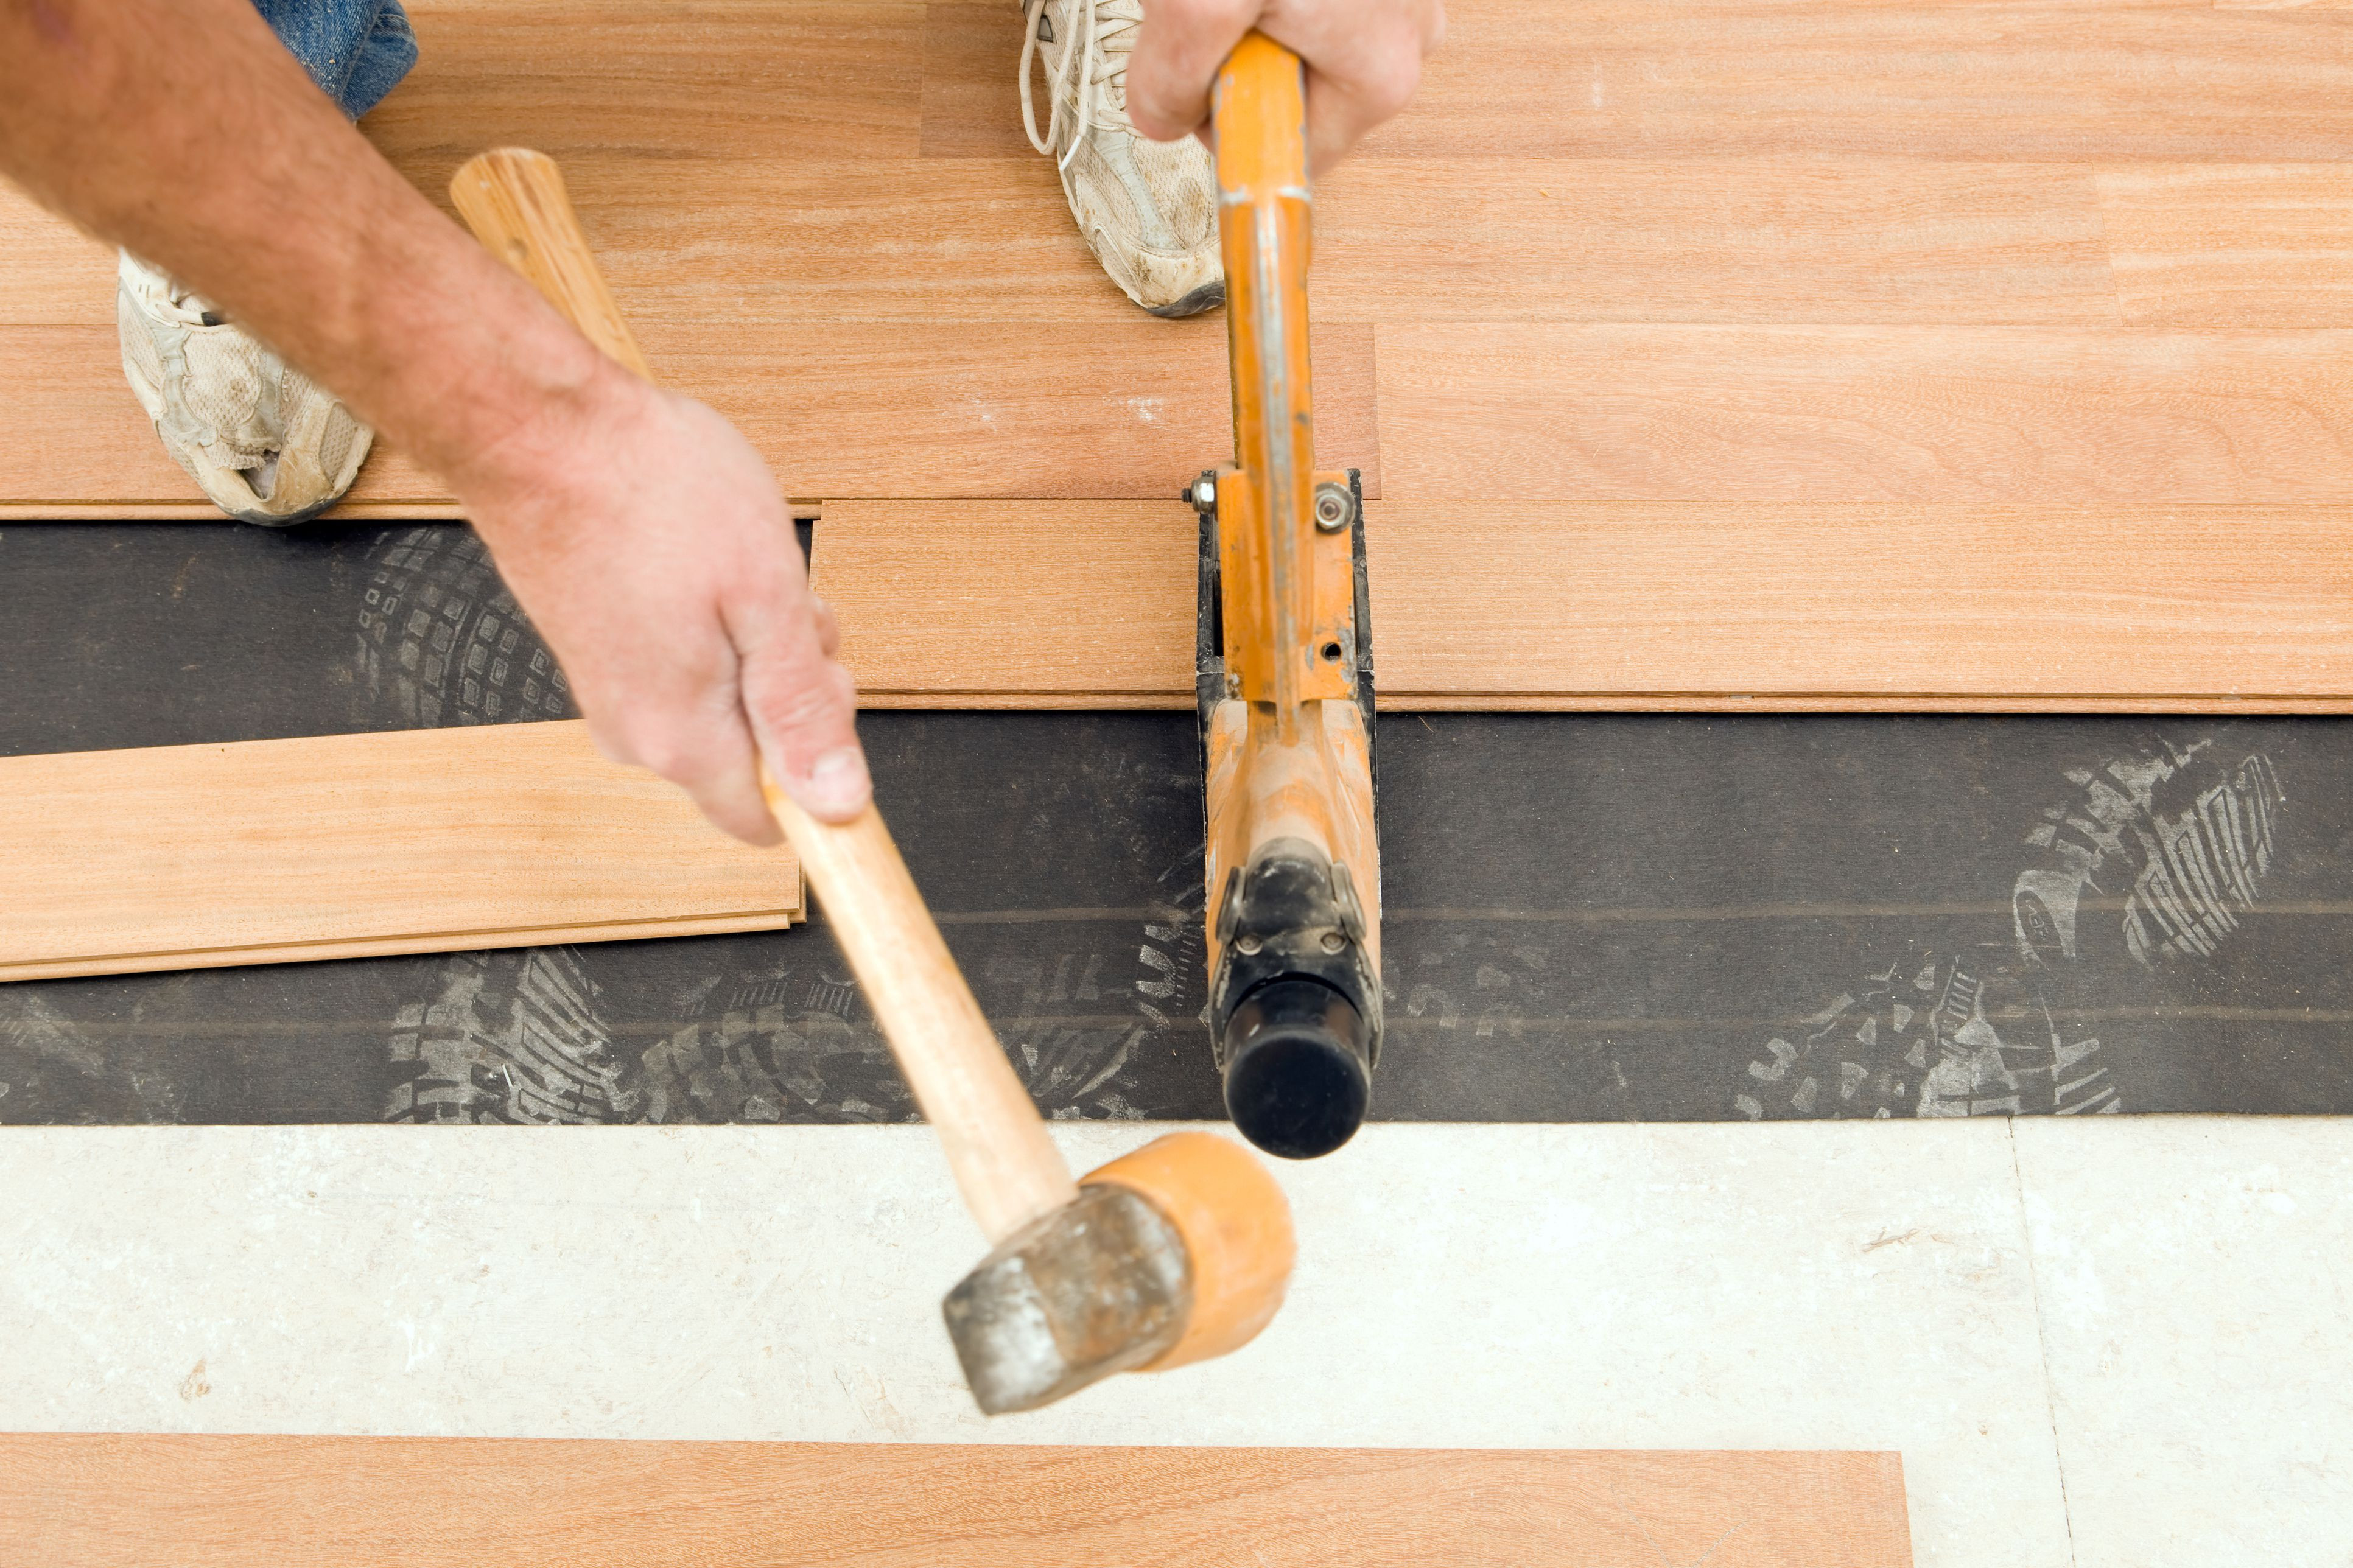 Walnut Hardwood Flooring for Sale Of the Hardest Wood Flooring You Can Buy with Worker Installing New Cumuru Hardwood Floor 186852280 5827f3bc5f9b58d5b11372fc